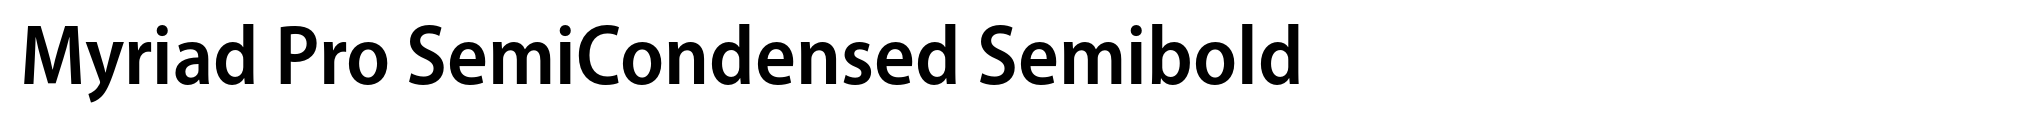 Myriad Pro SemiCondensed Semibold image